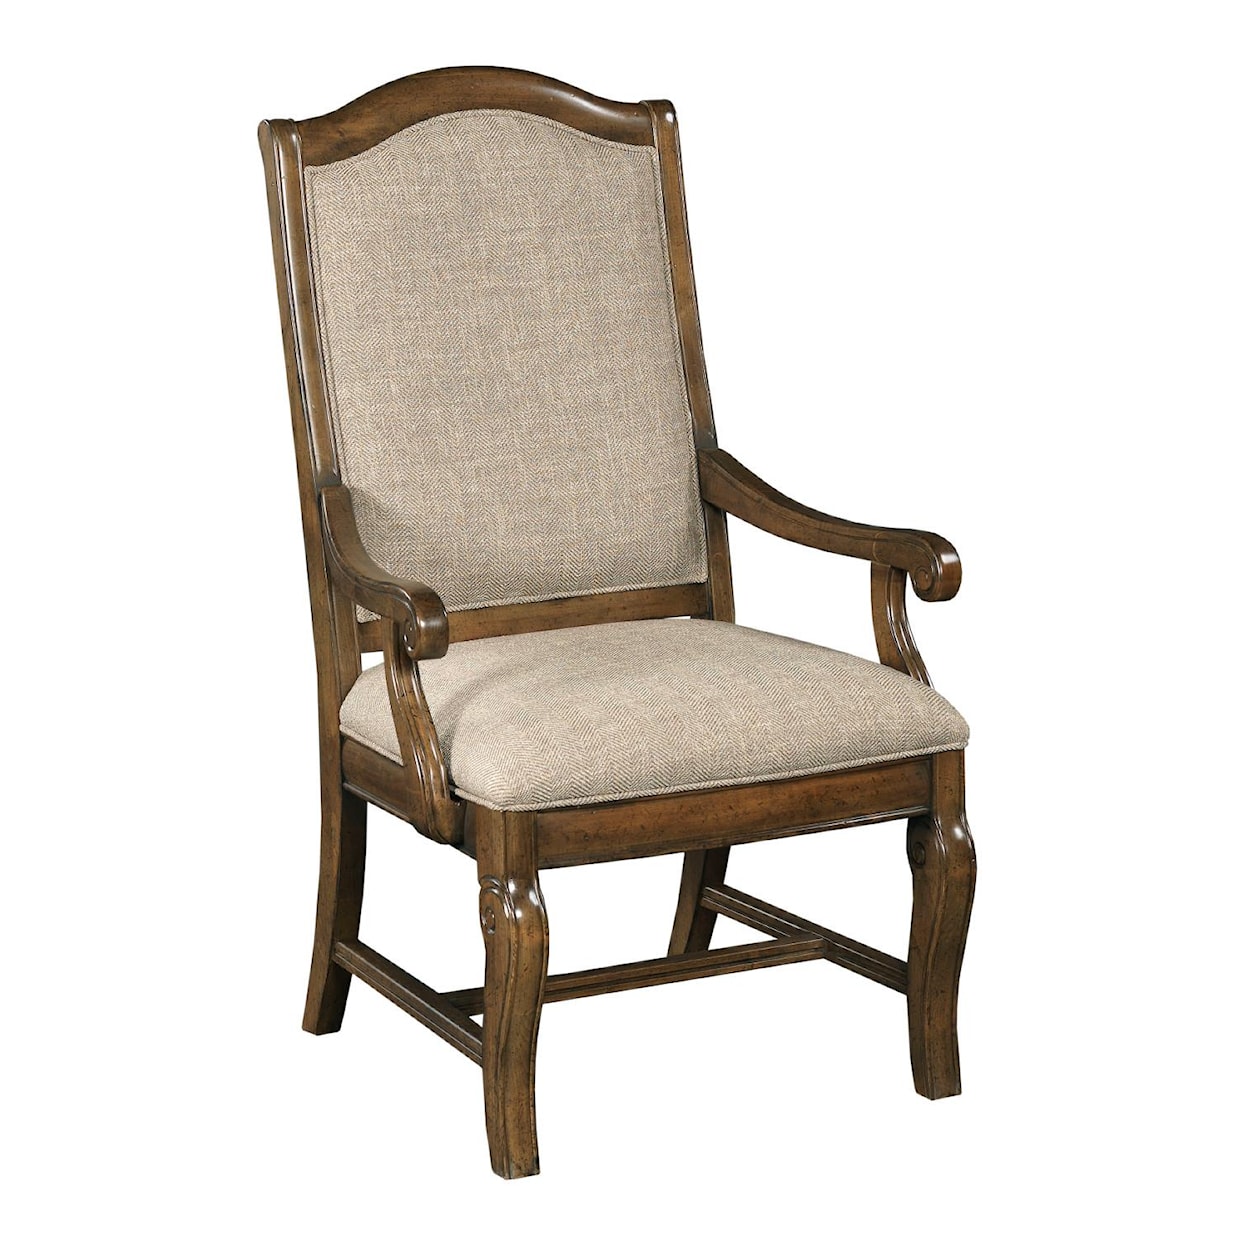 Kincaid Furniture Portolone Upholstered Arm Chair